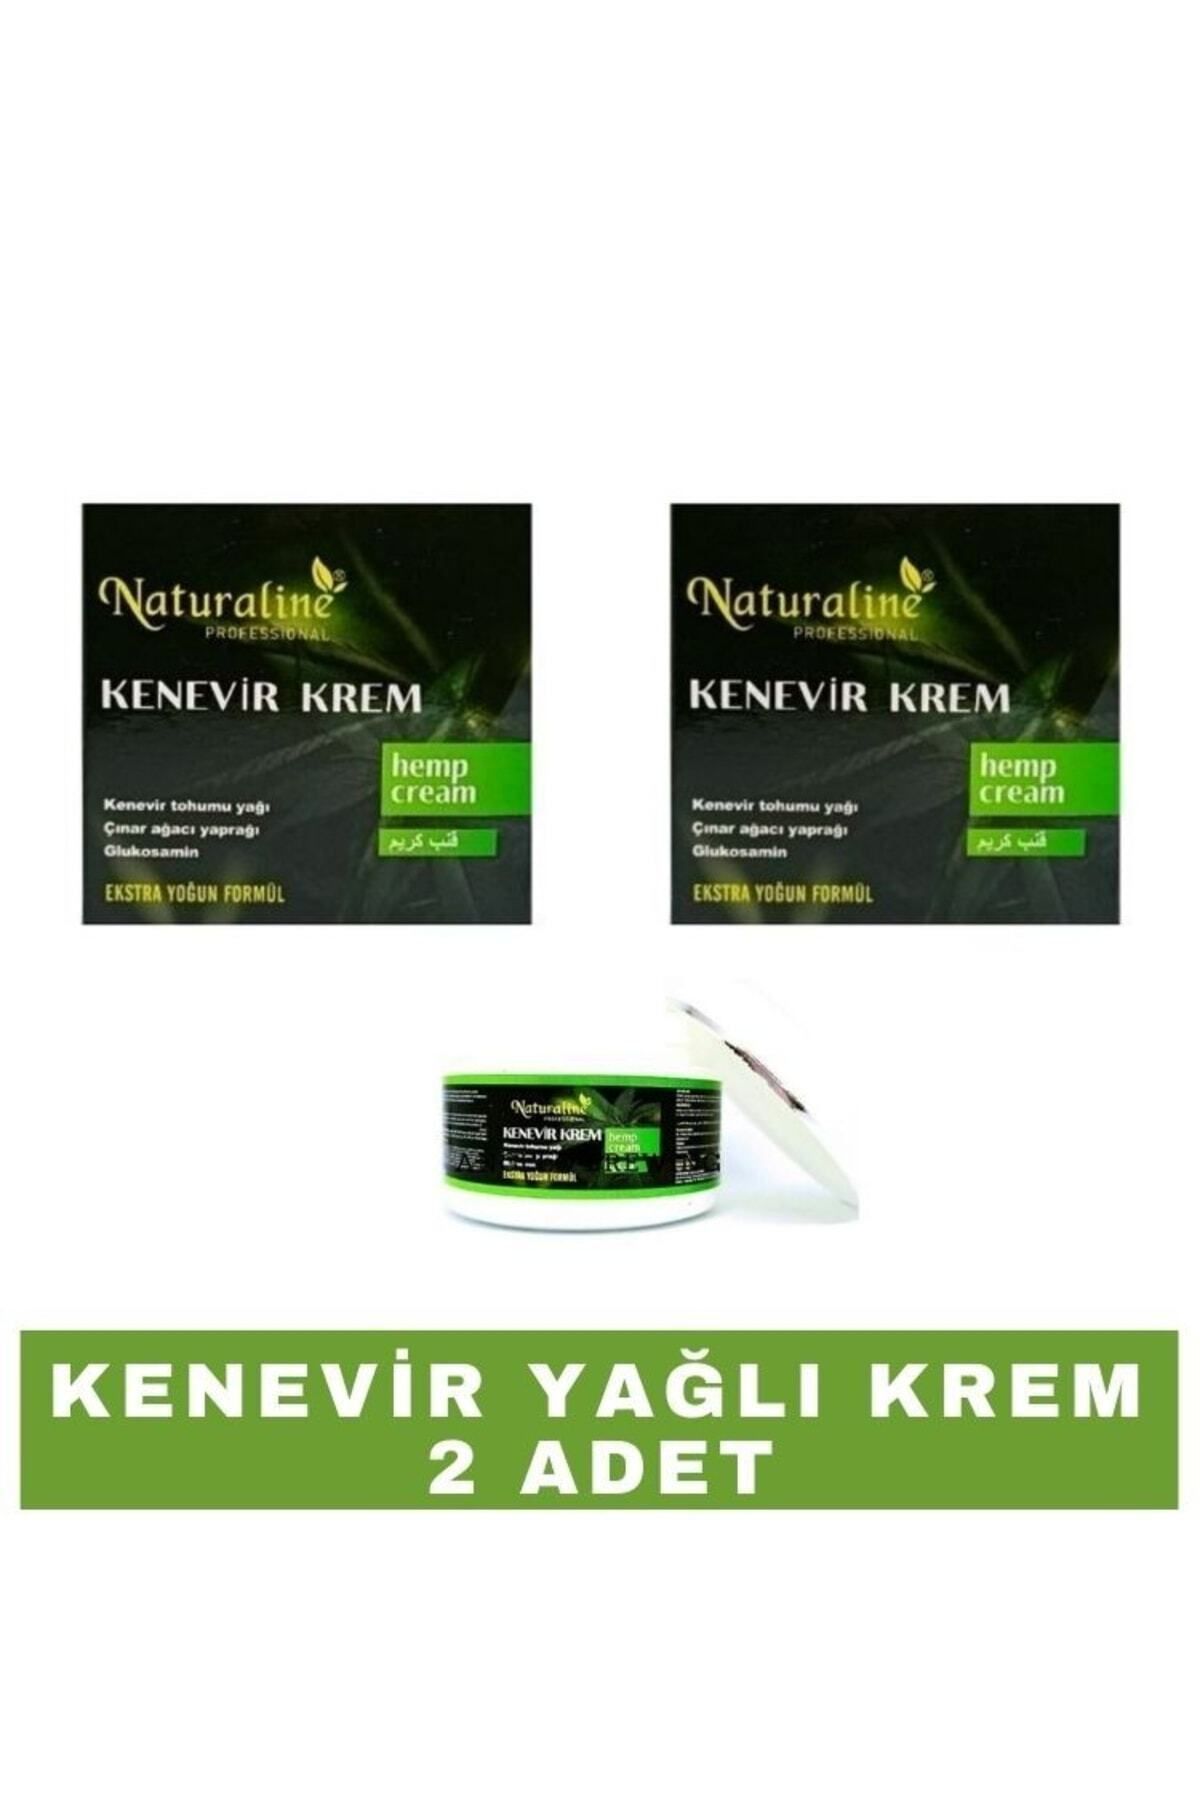 Naturaline Hemp Cream Kenevir Kremi 100 ml * 2 Adet